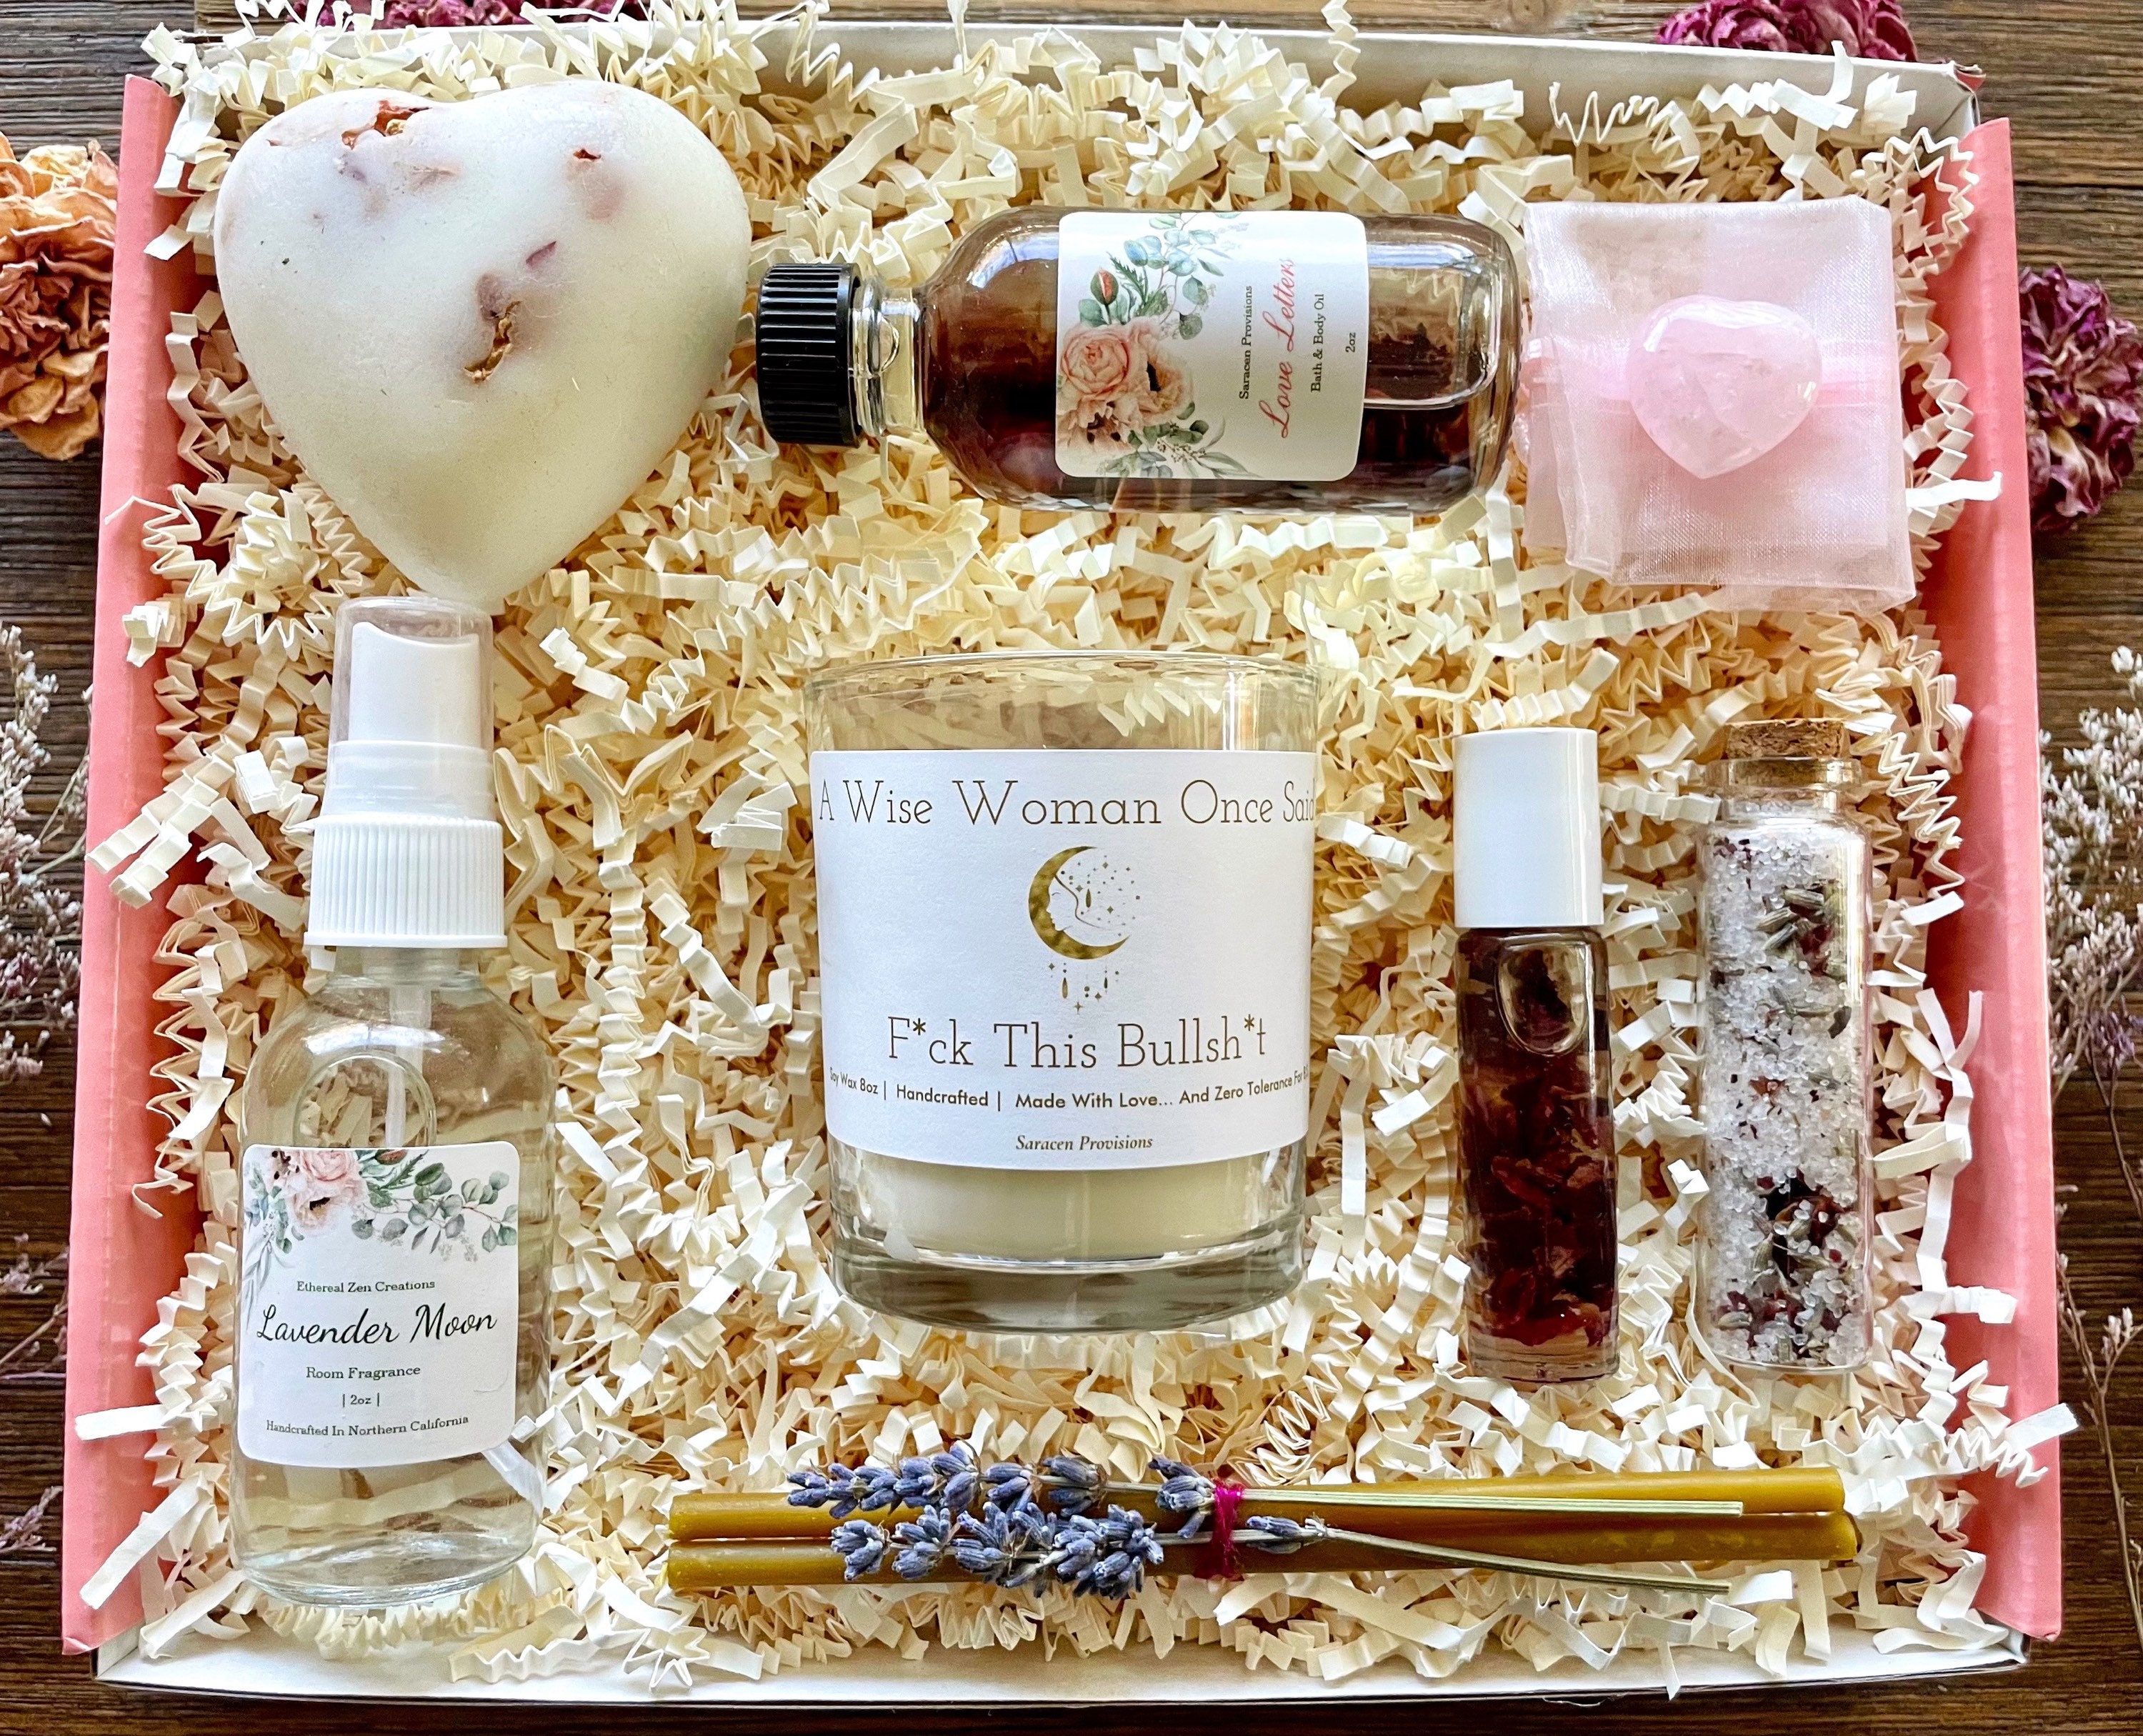 Women Perfume Gift Set - Lovery Gift Baskets